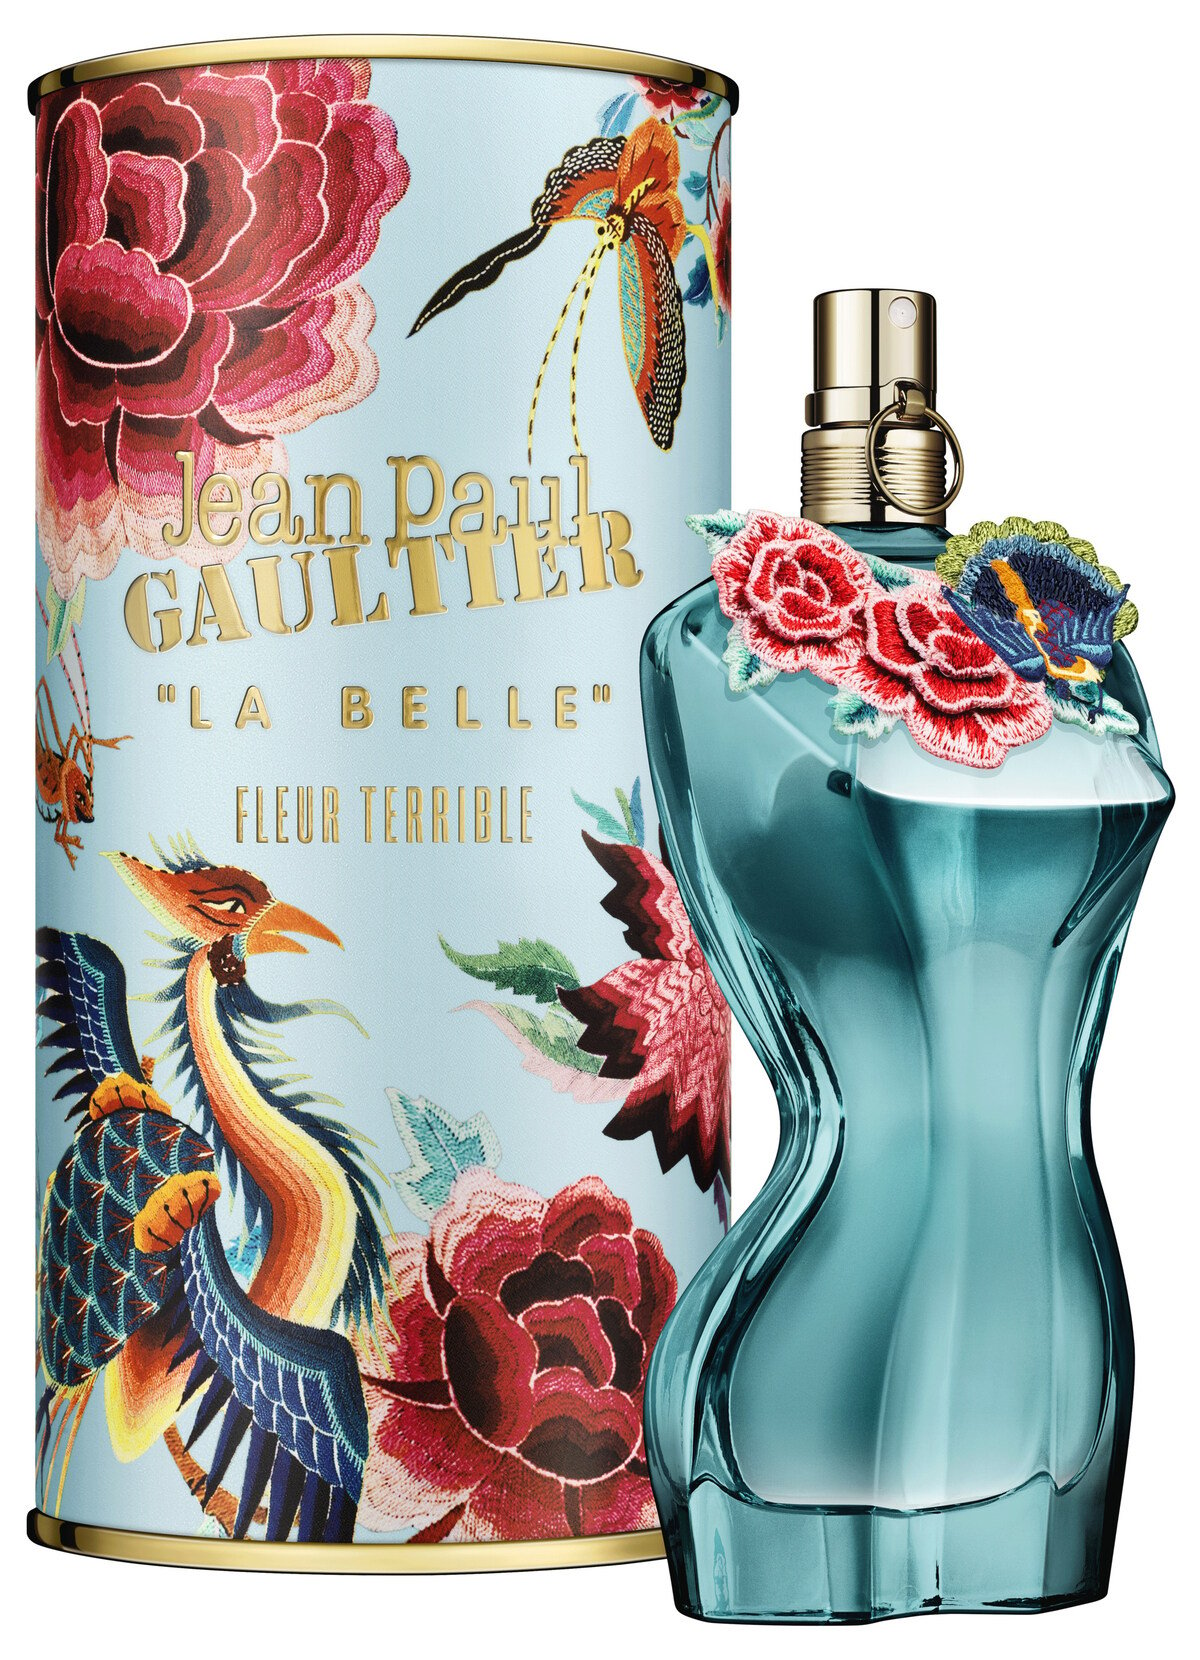 La Belle Fleur by Jean Gaultier » Reviews & Perfume Facts